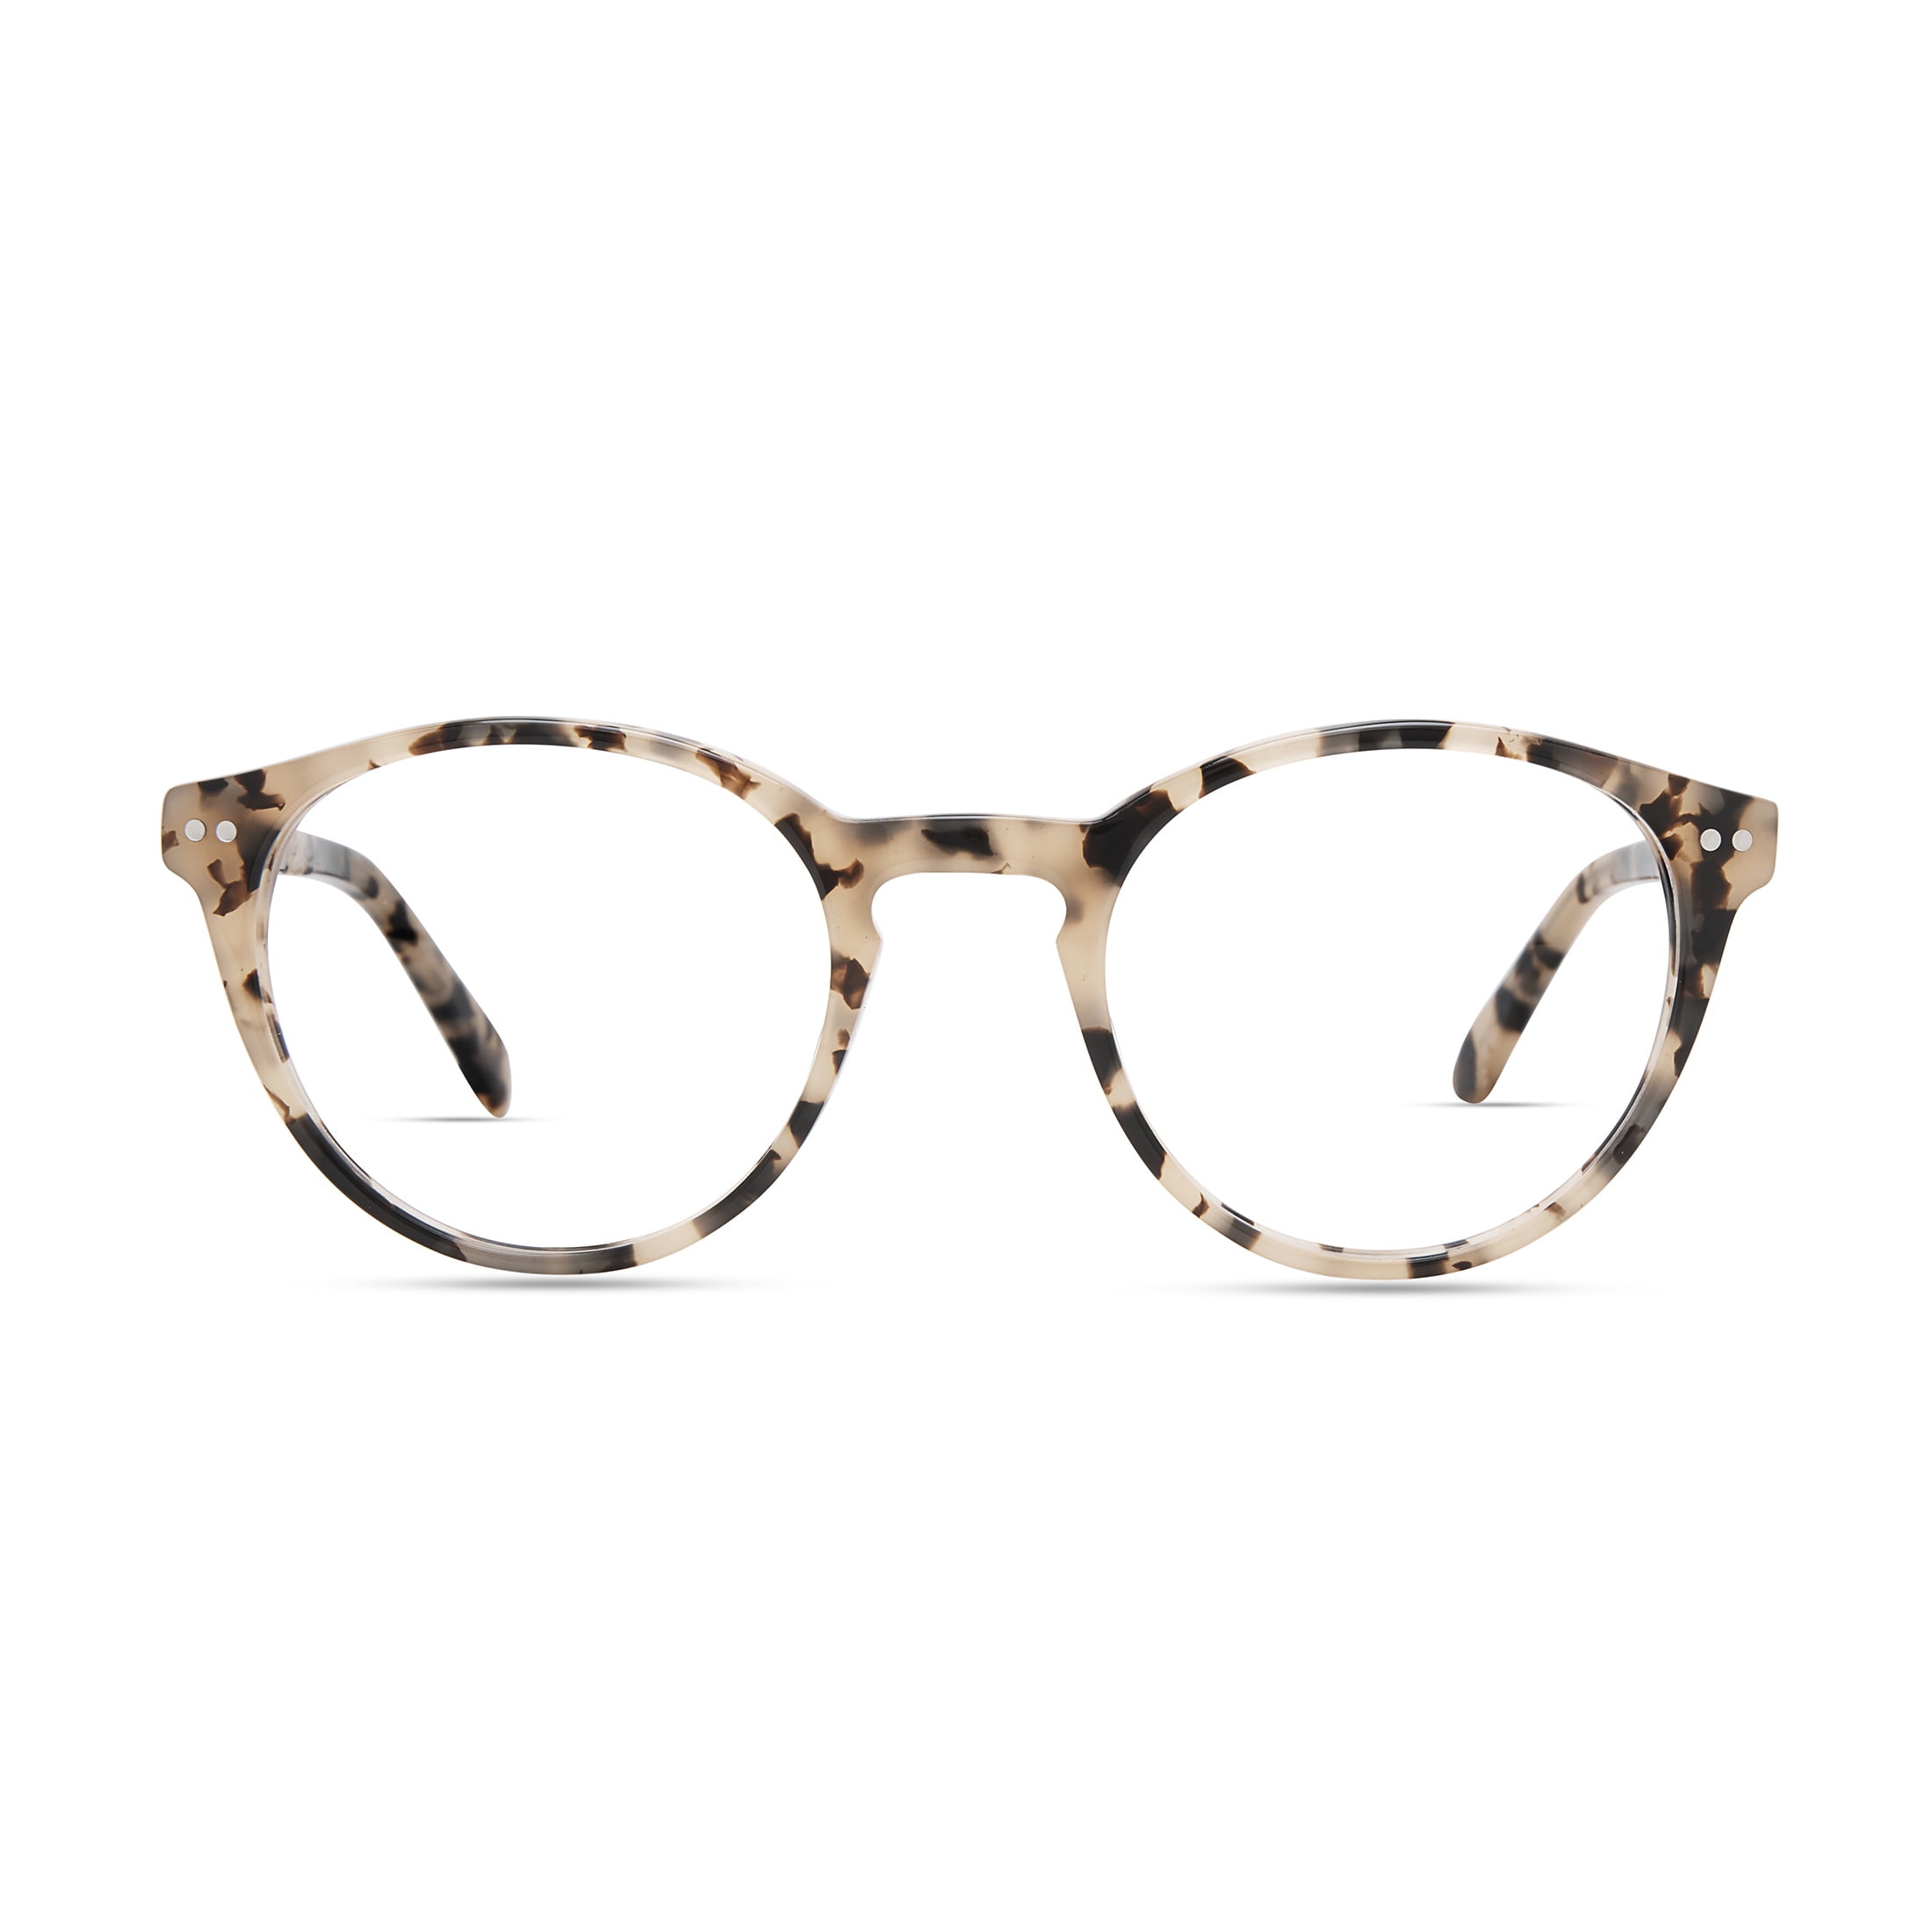 Progressive Eyeglasses Online with Largefit, Square, Full-Rim Plastic/ Metal Design — Cosmo in Tortoise/black/matte Beige by Eyebuydirect - Lenses